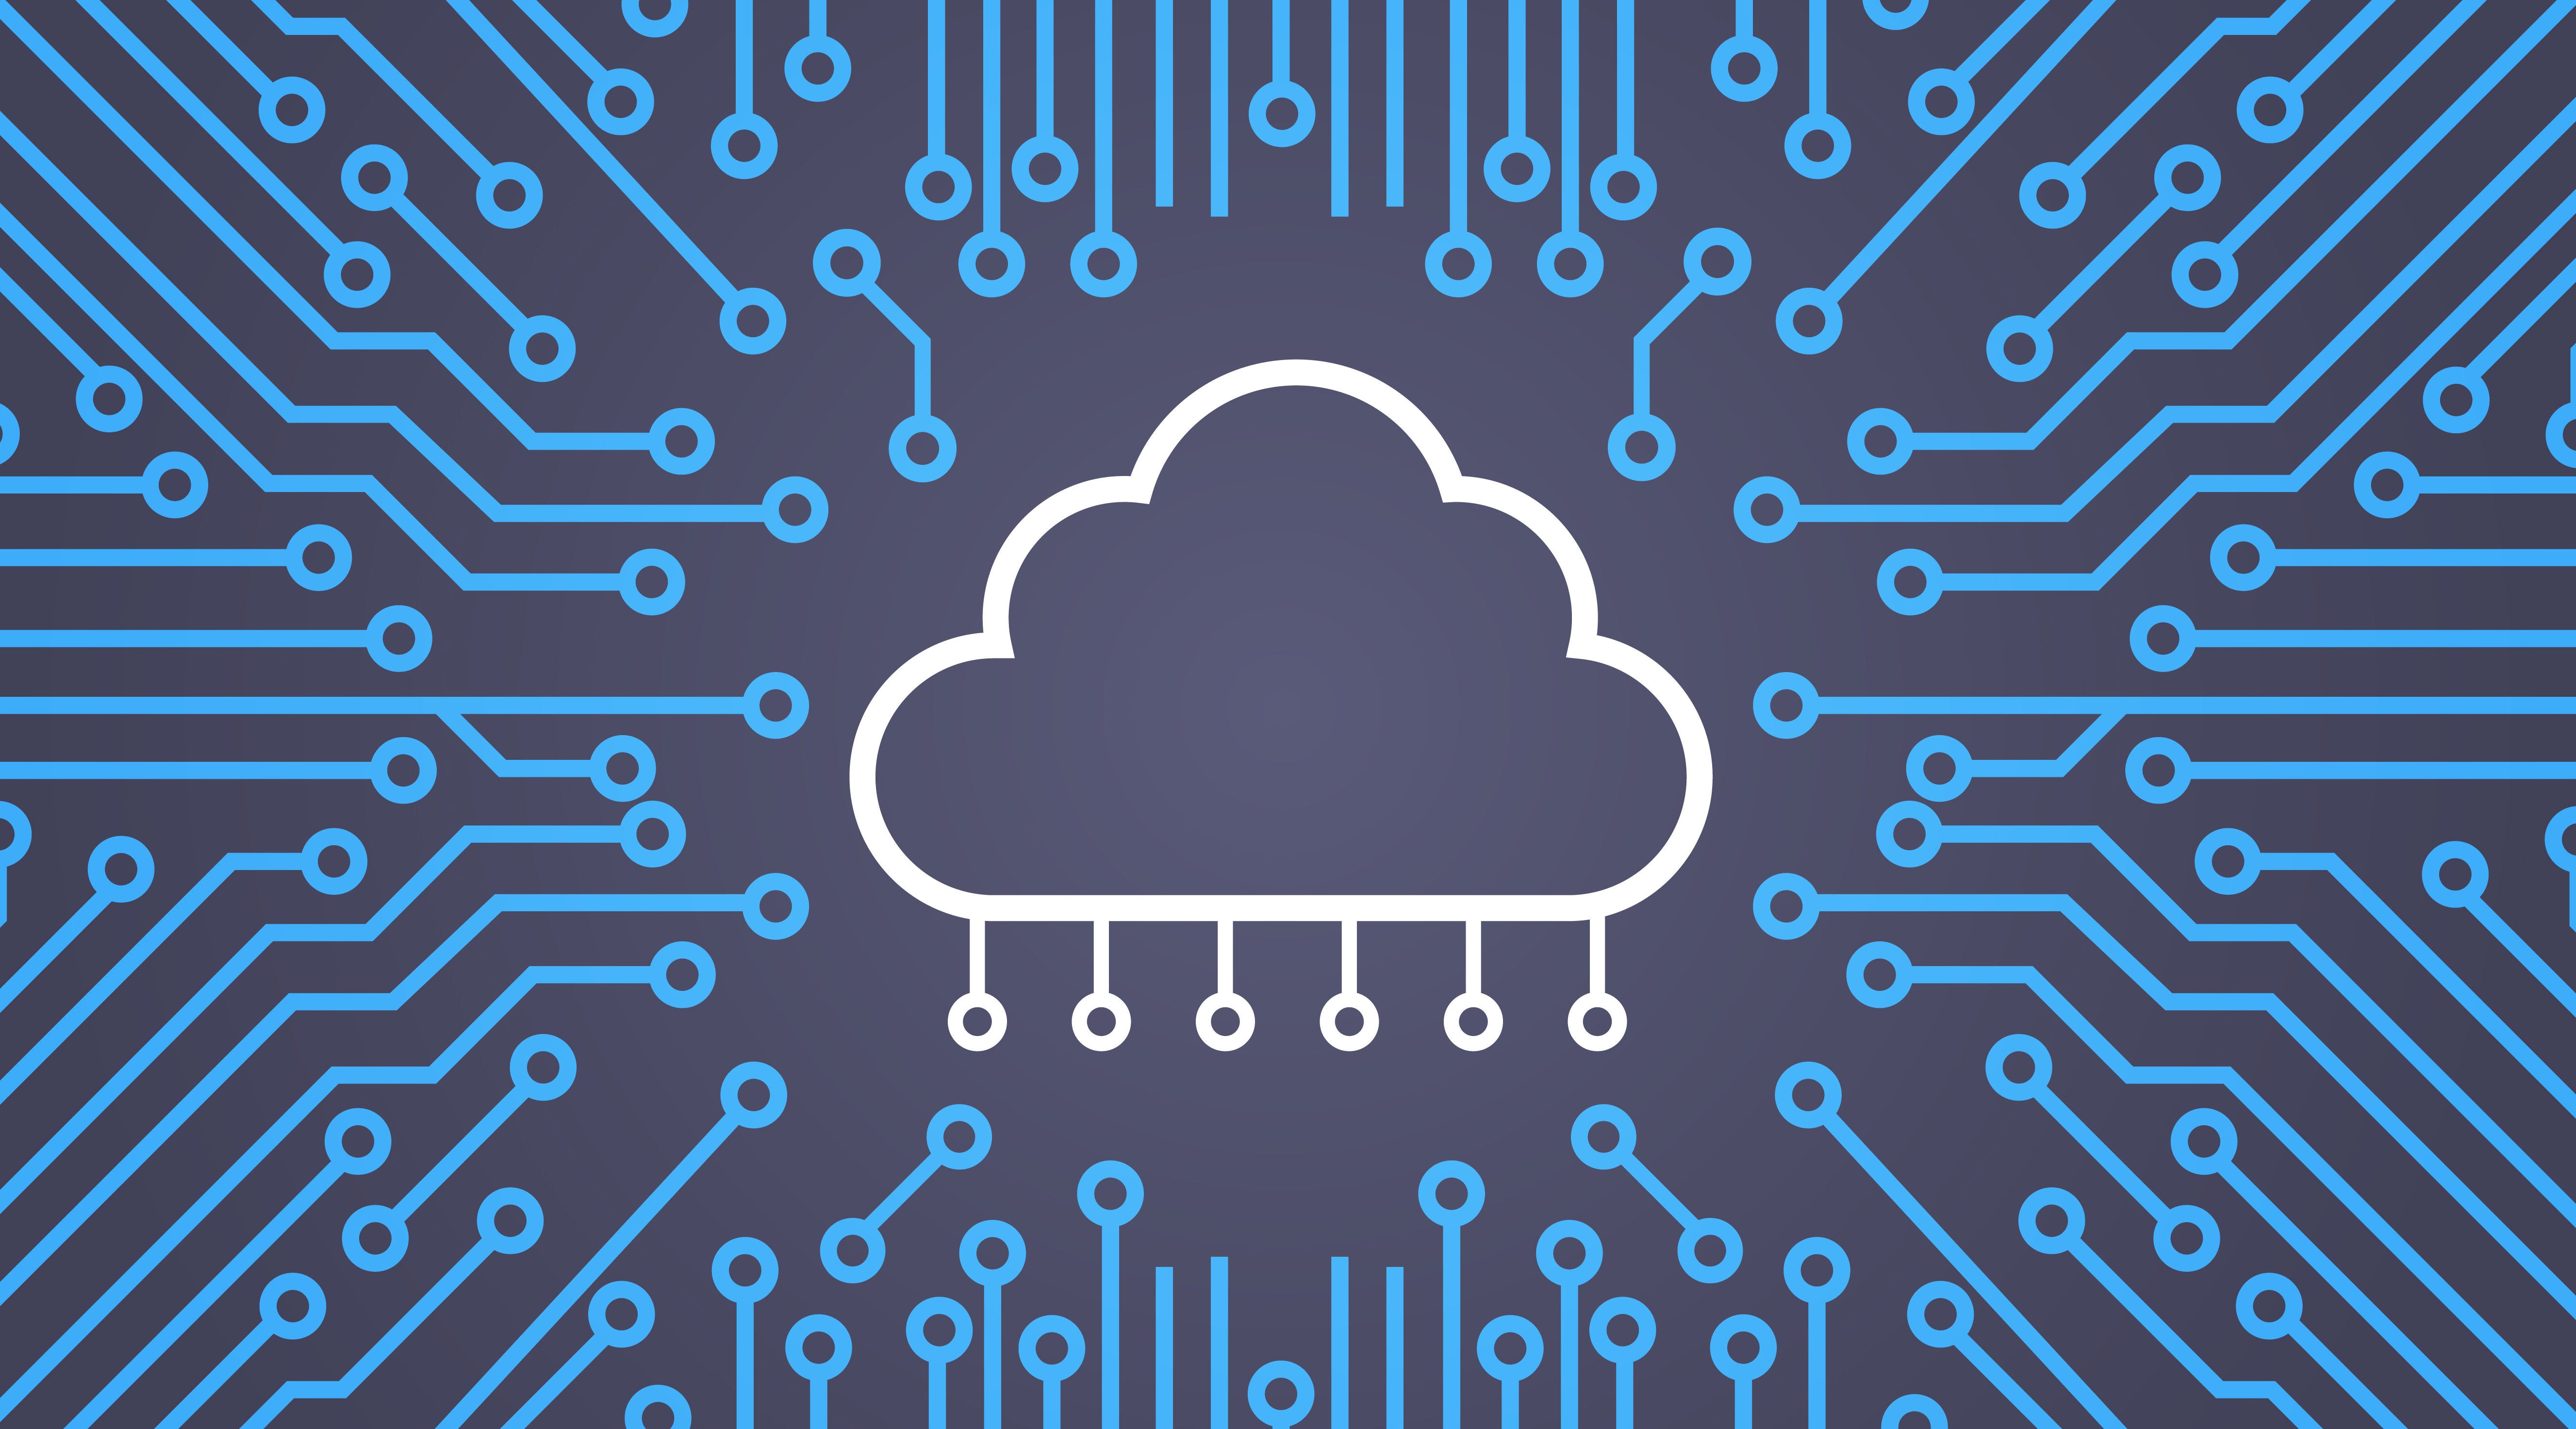 Cloud Database Over Computer Chip Moterboard Background Data Center System Concept Banner Vector Illustration